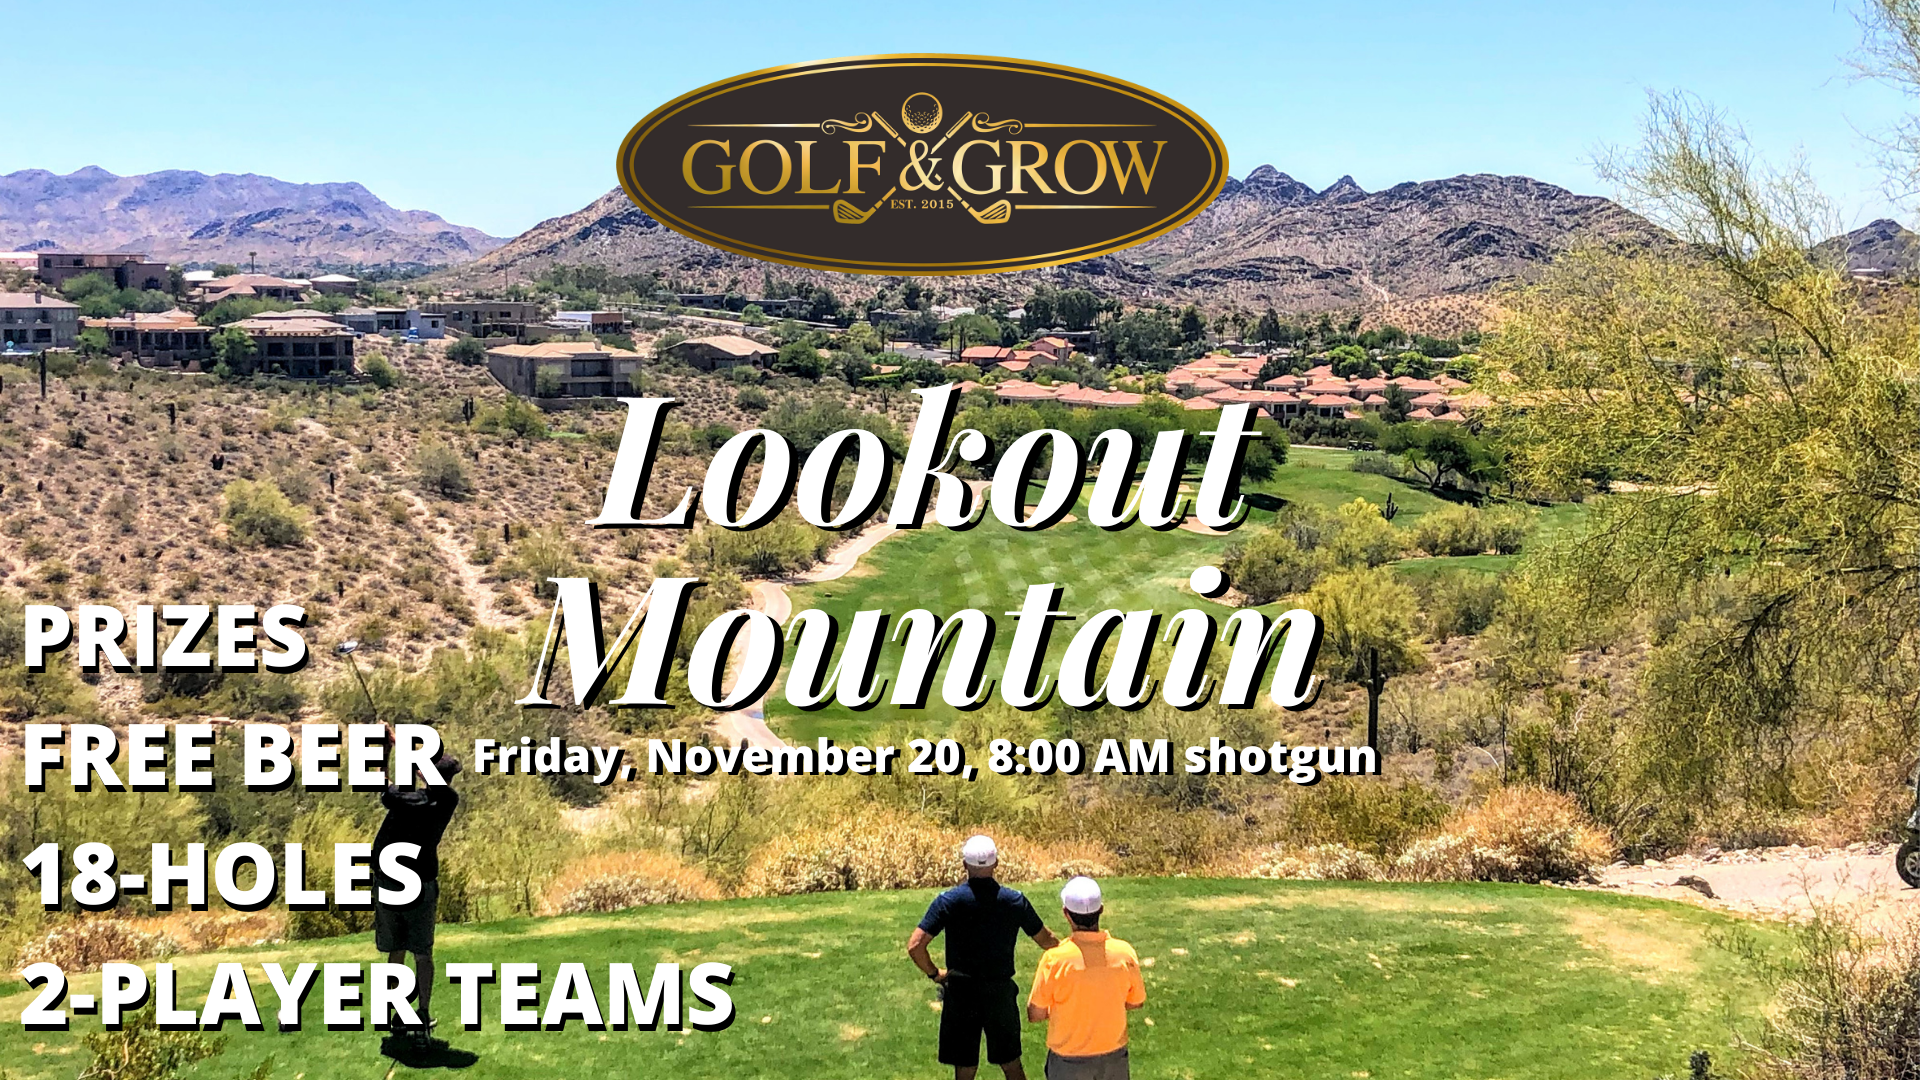 Golf & Grow is the best golf league in Arizona